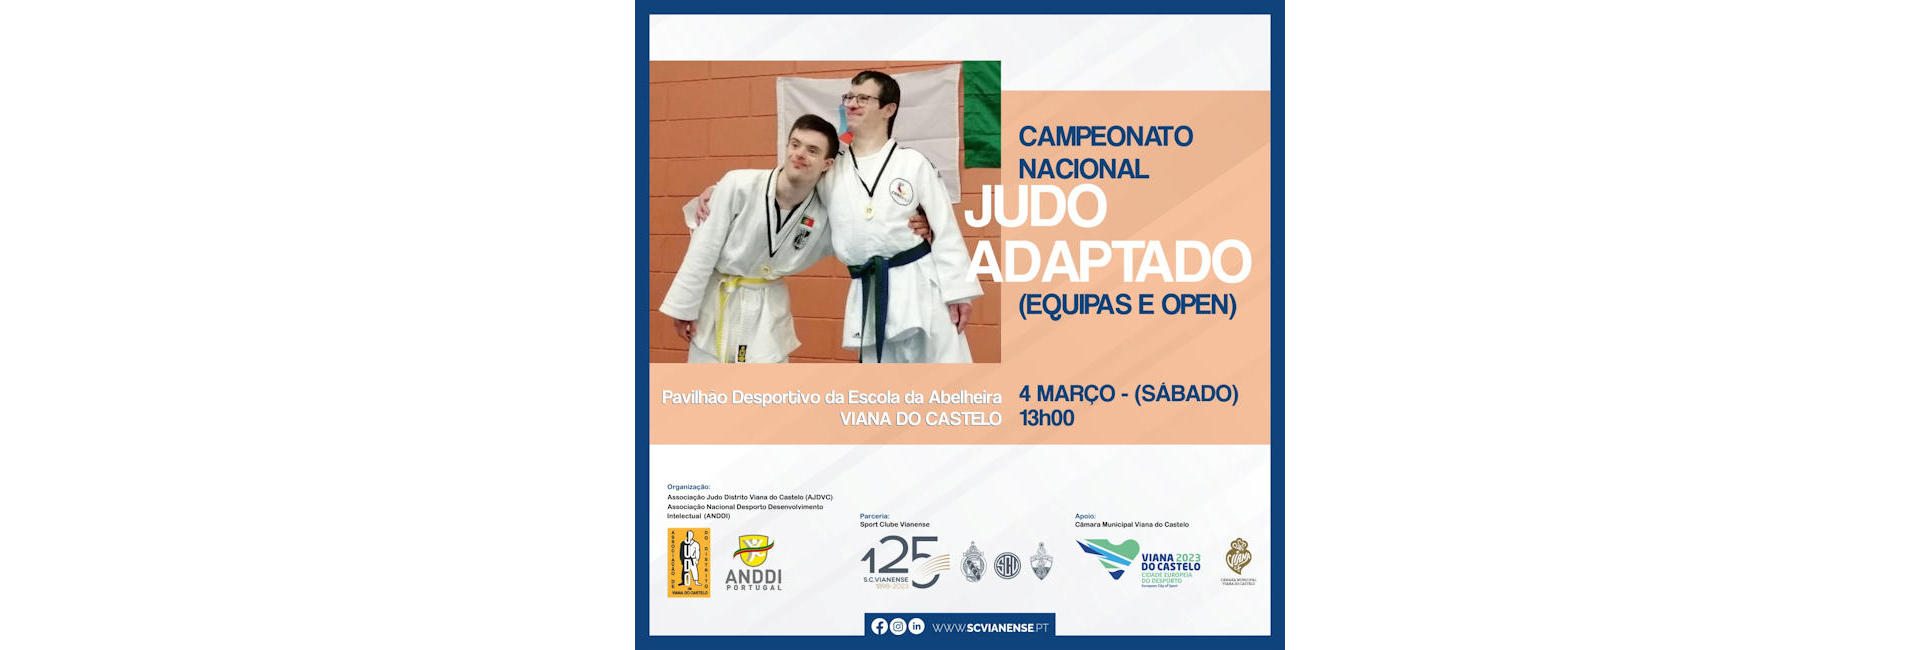 Campeonato Nacional Judo Adaptado